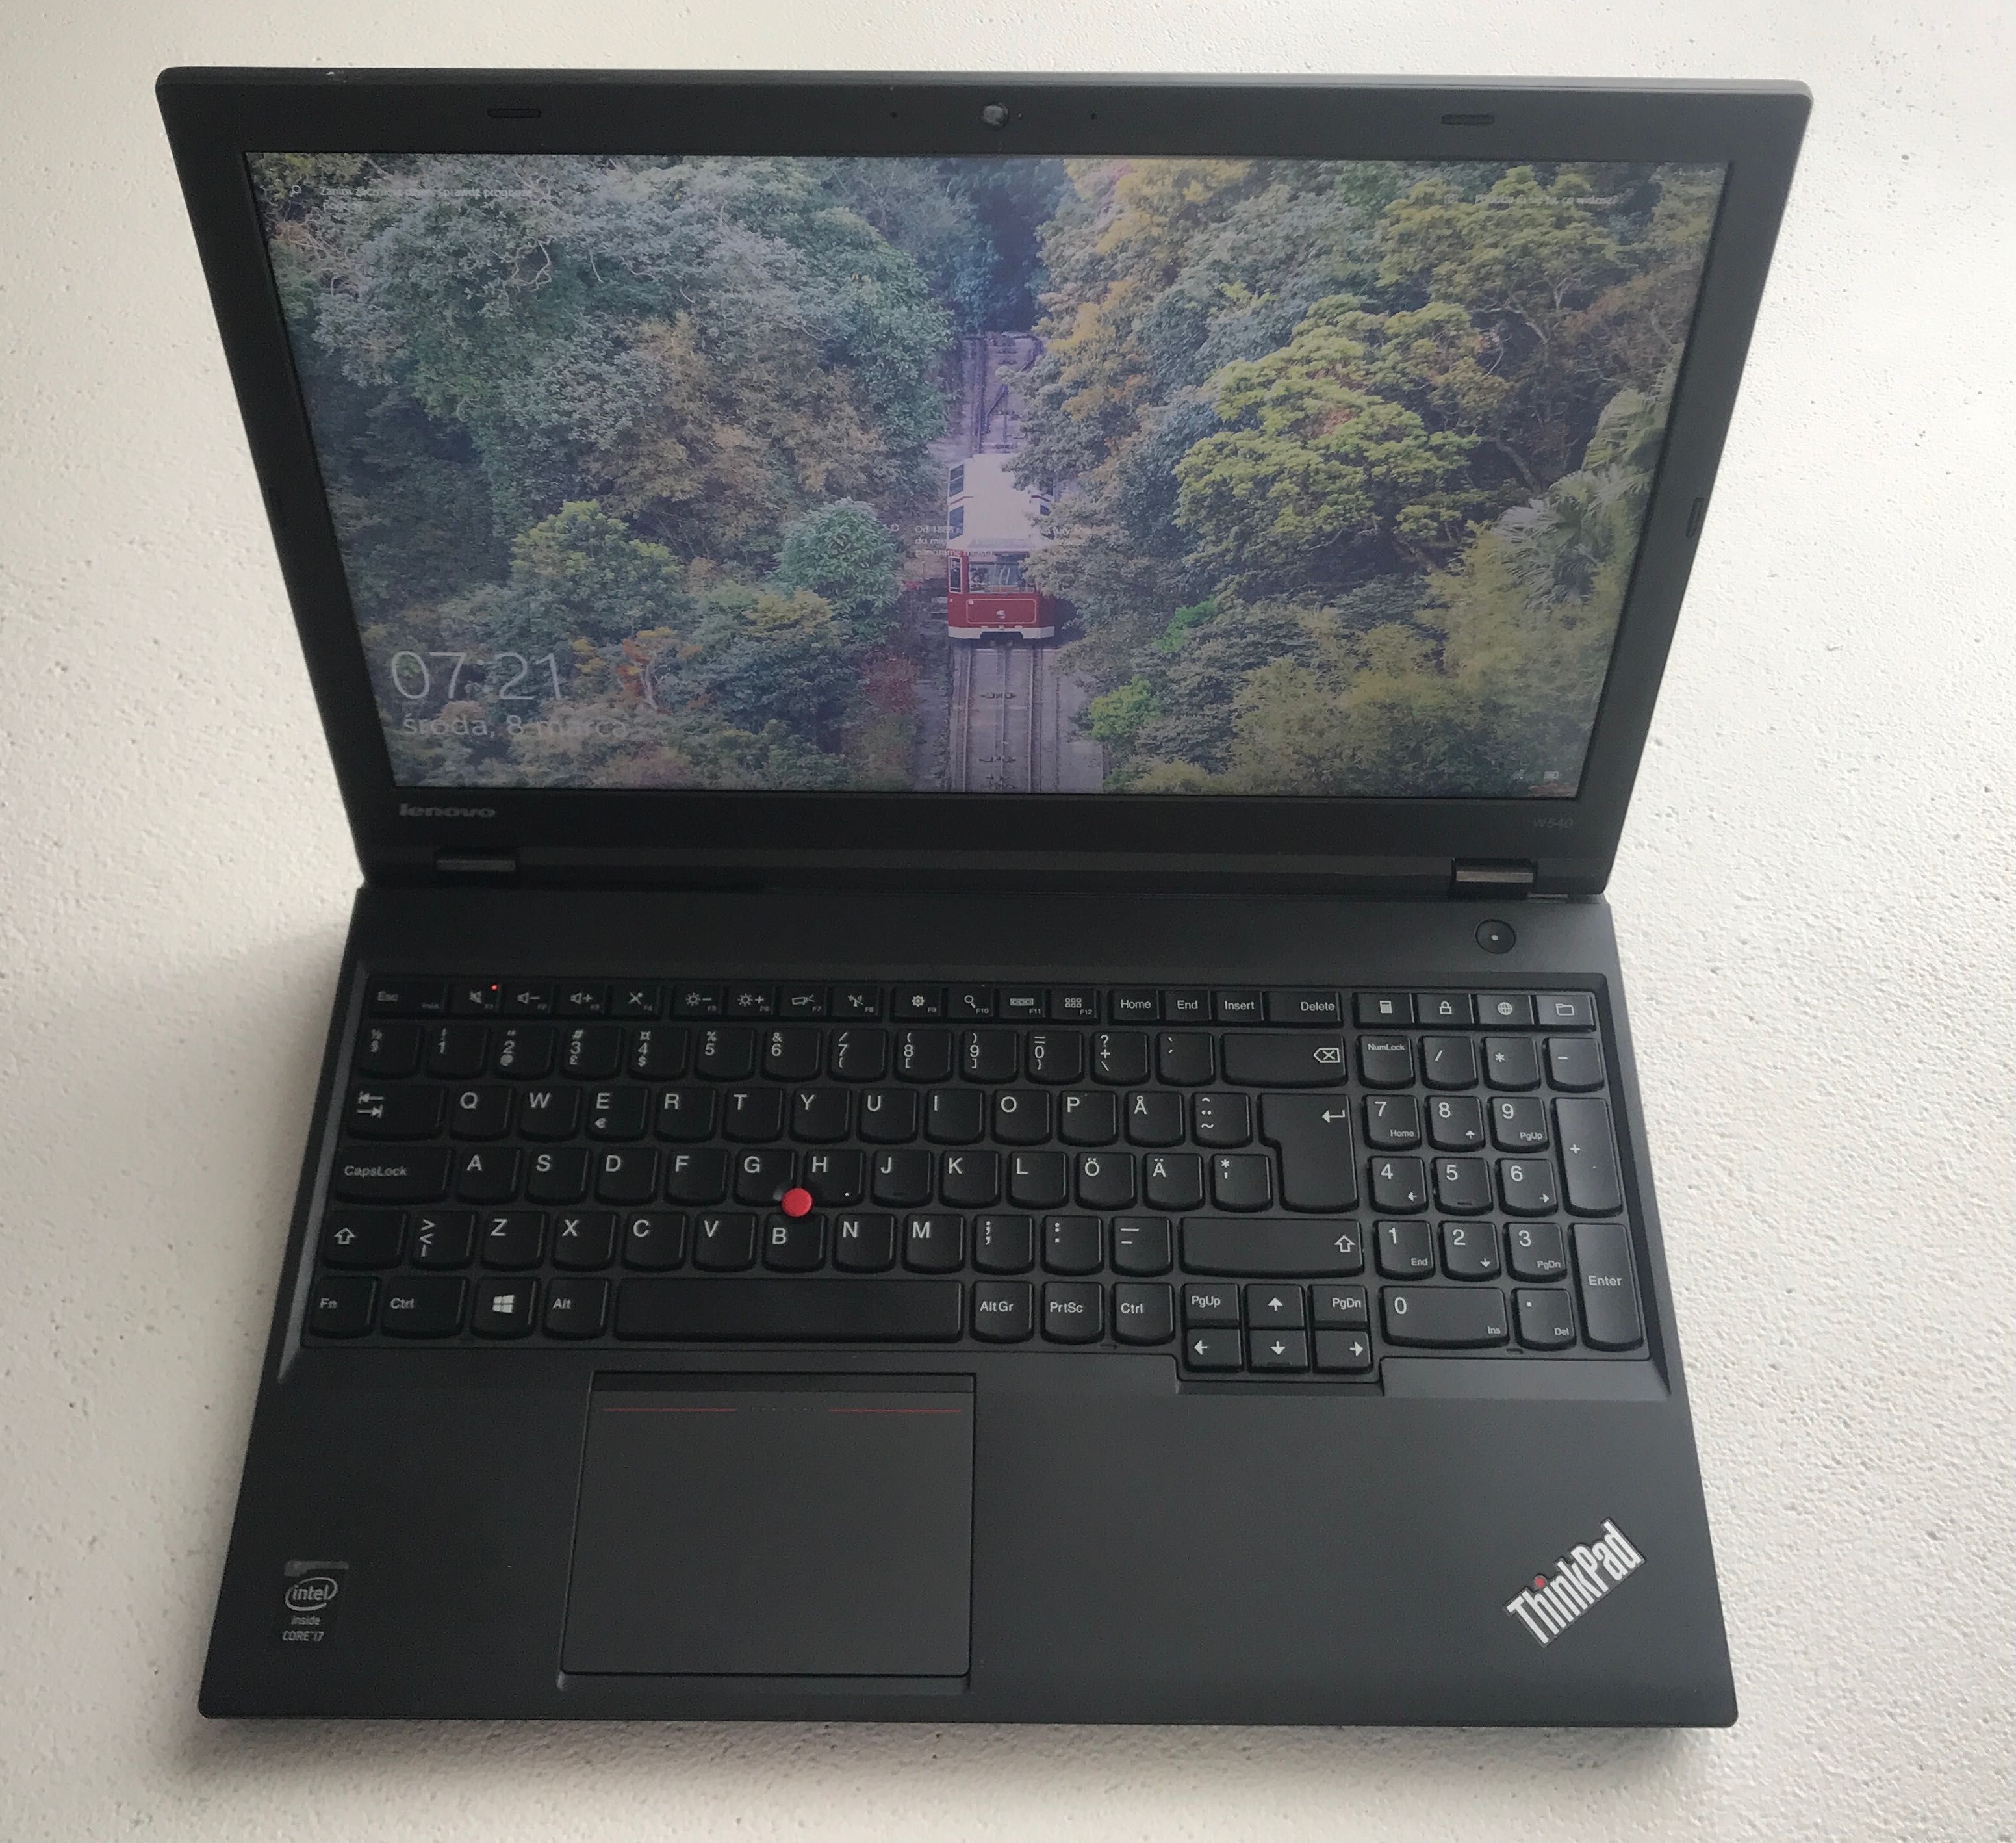 Laptop Lenovo Thinkpad W540 intel core i7 / 128gb ssd / 12gb ram